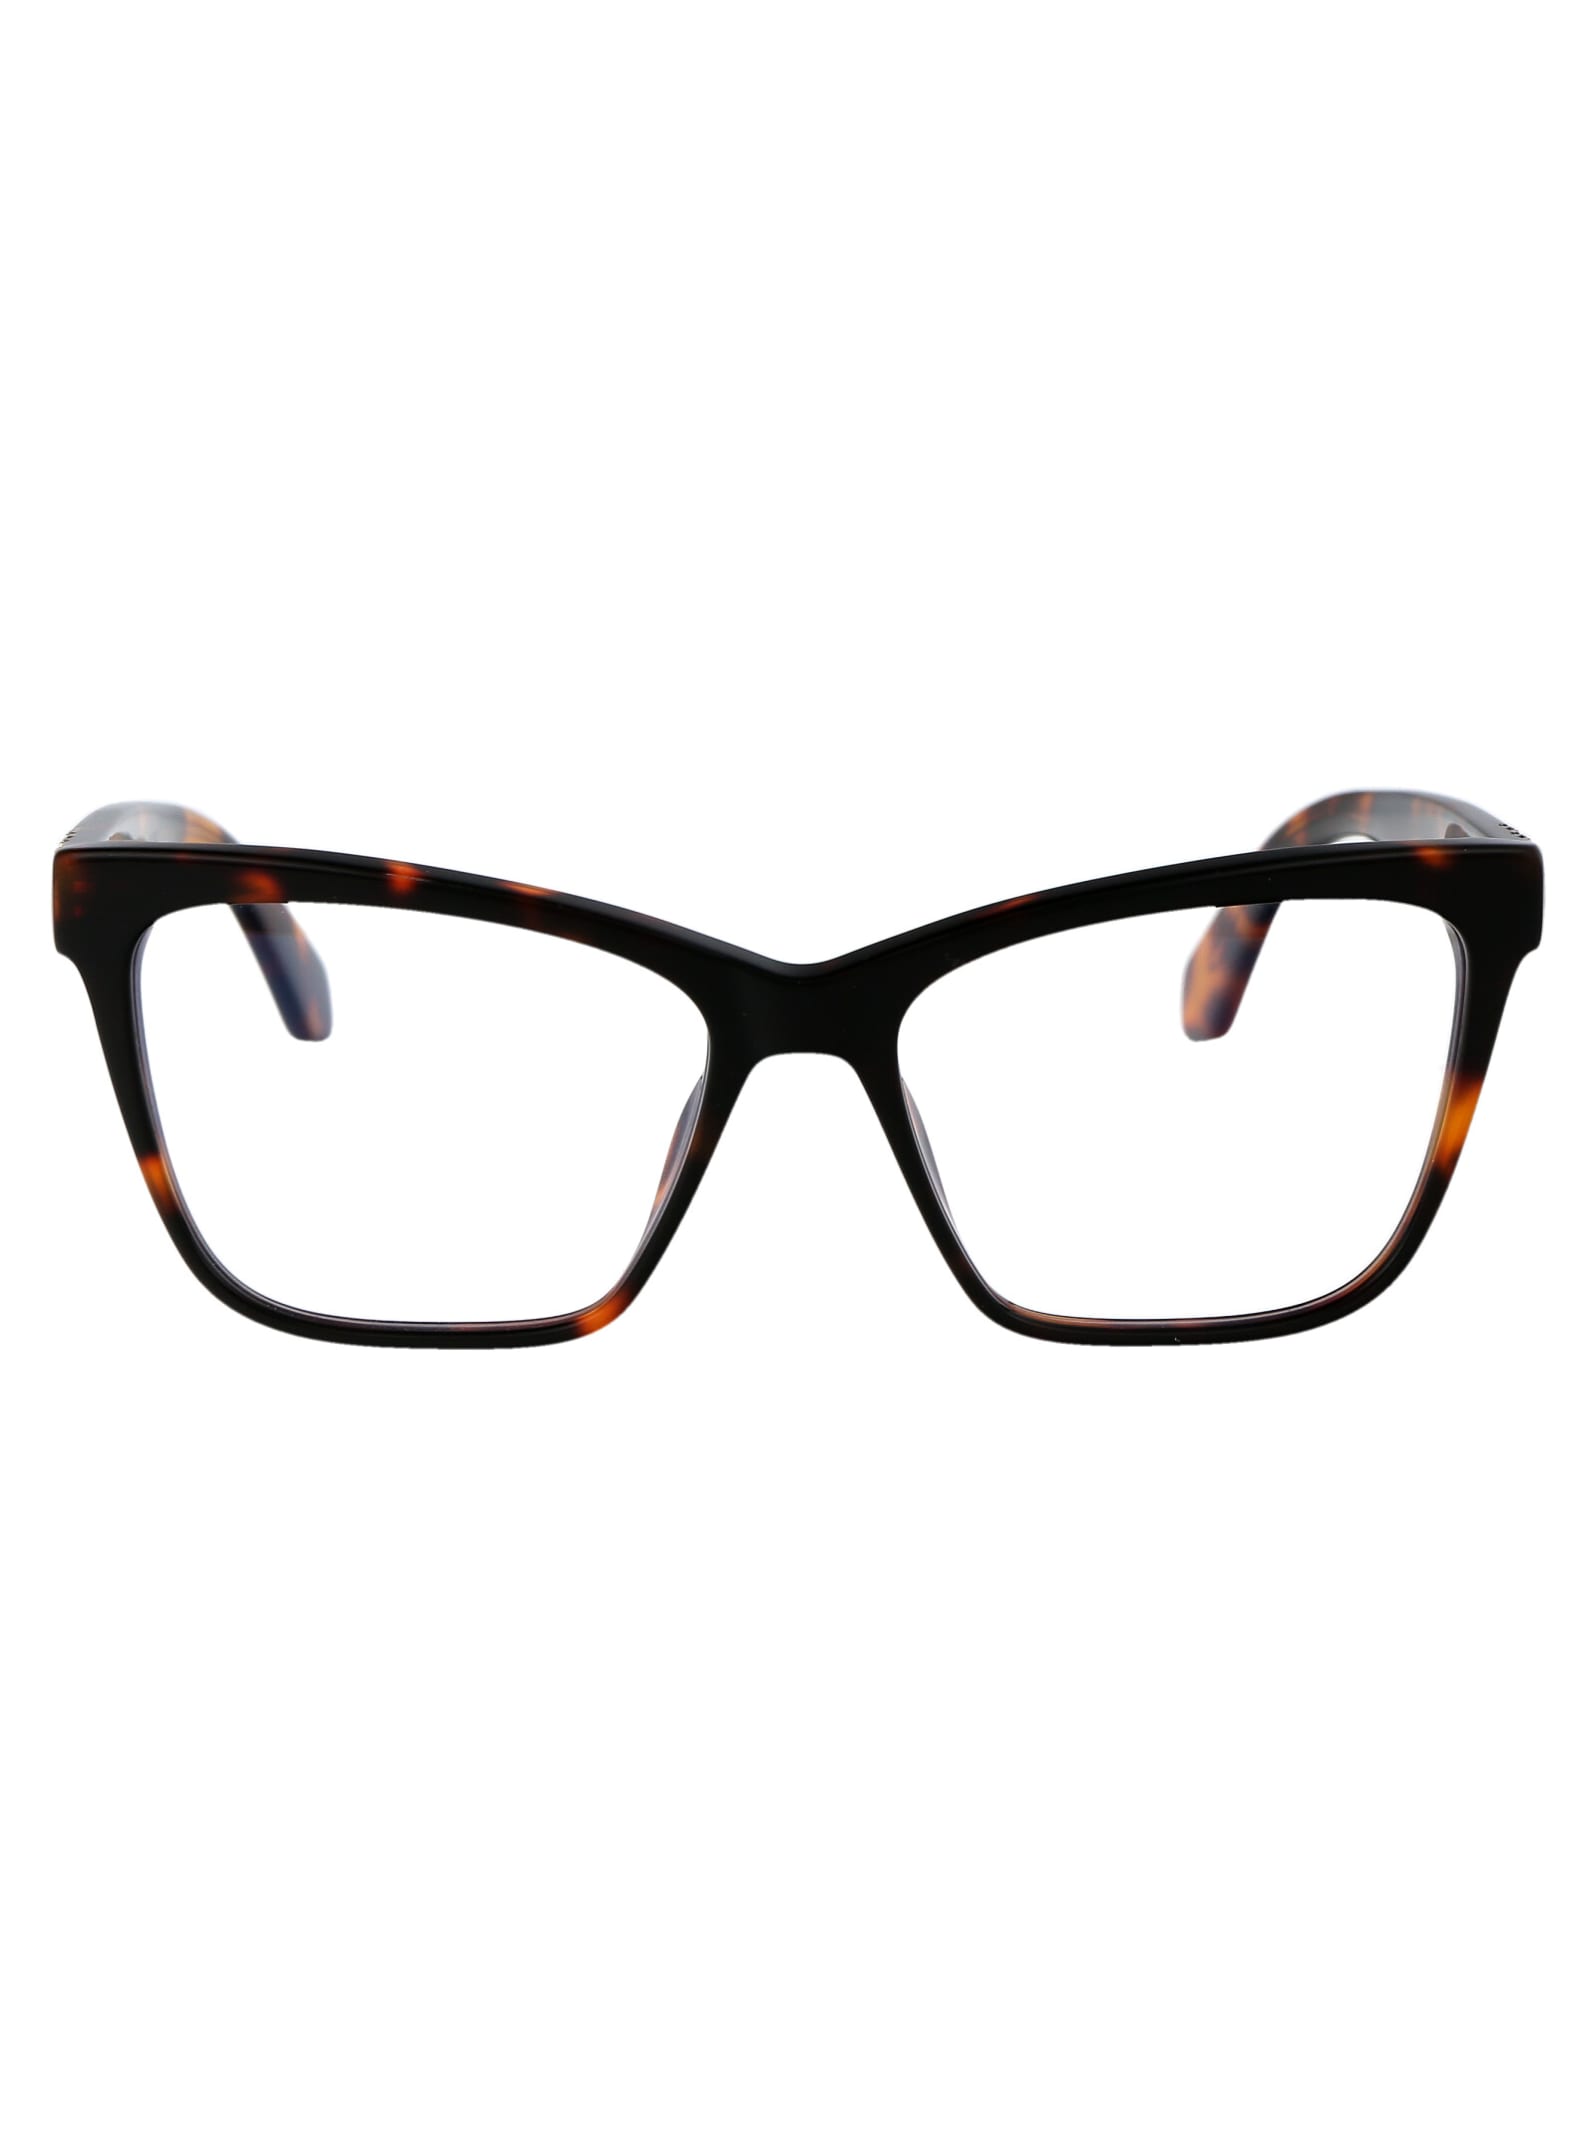 Optical Style 67 Glasses